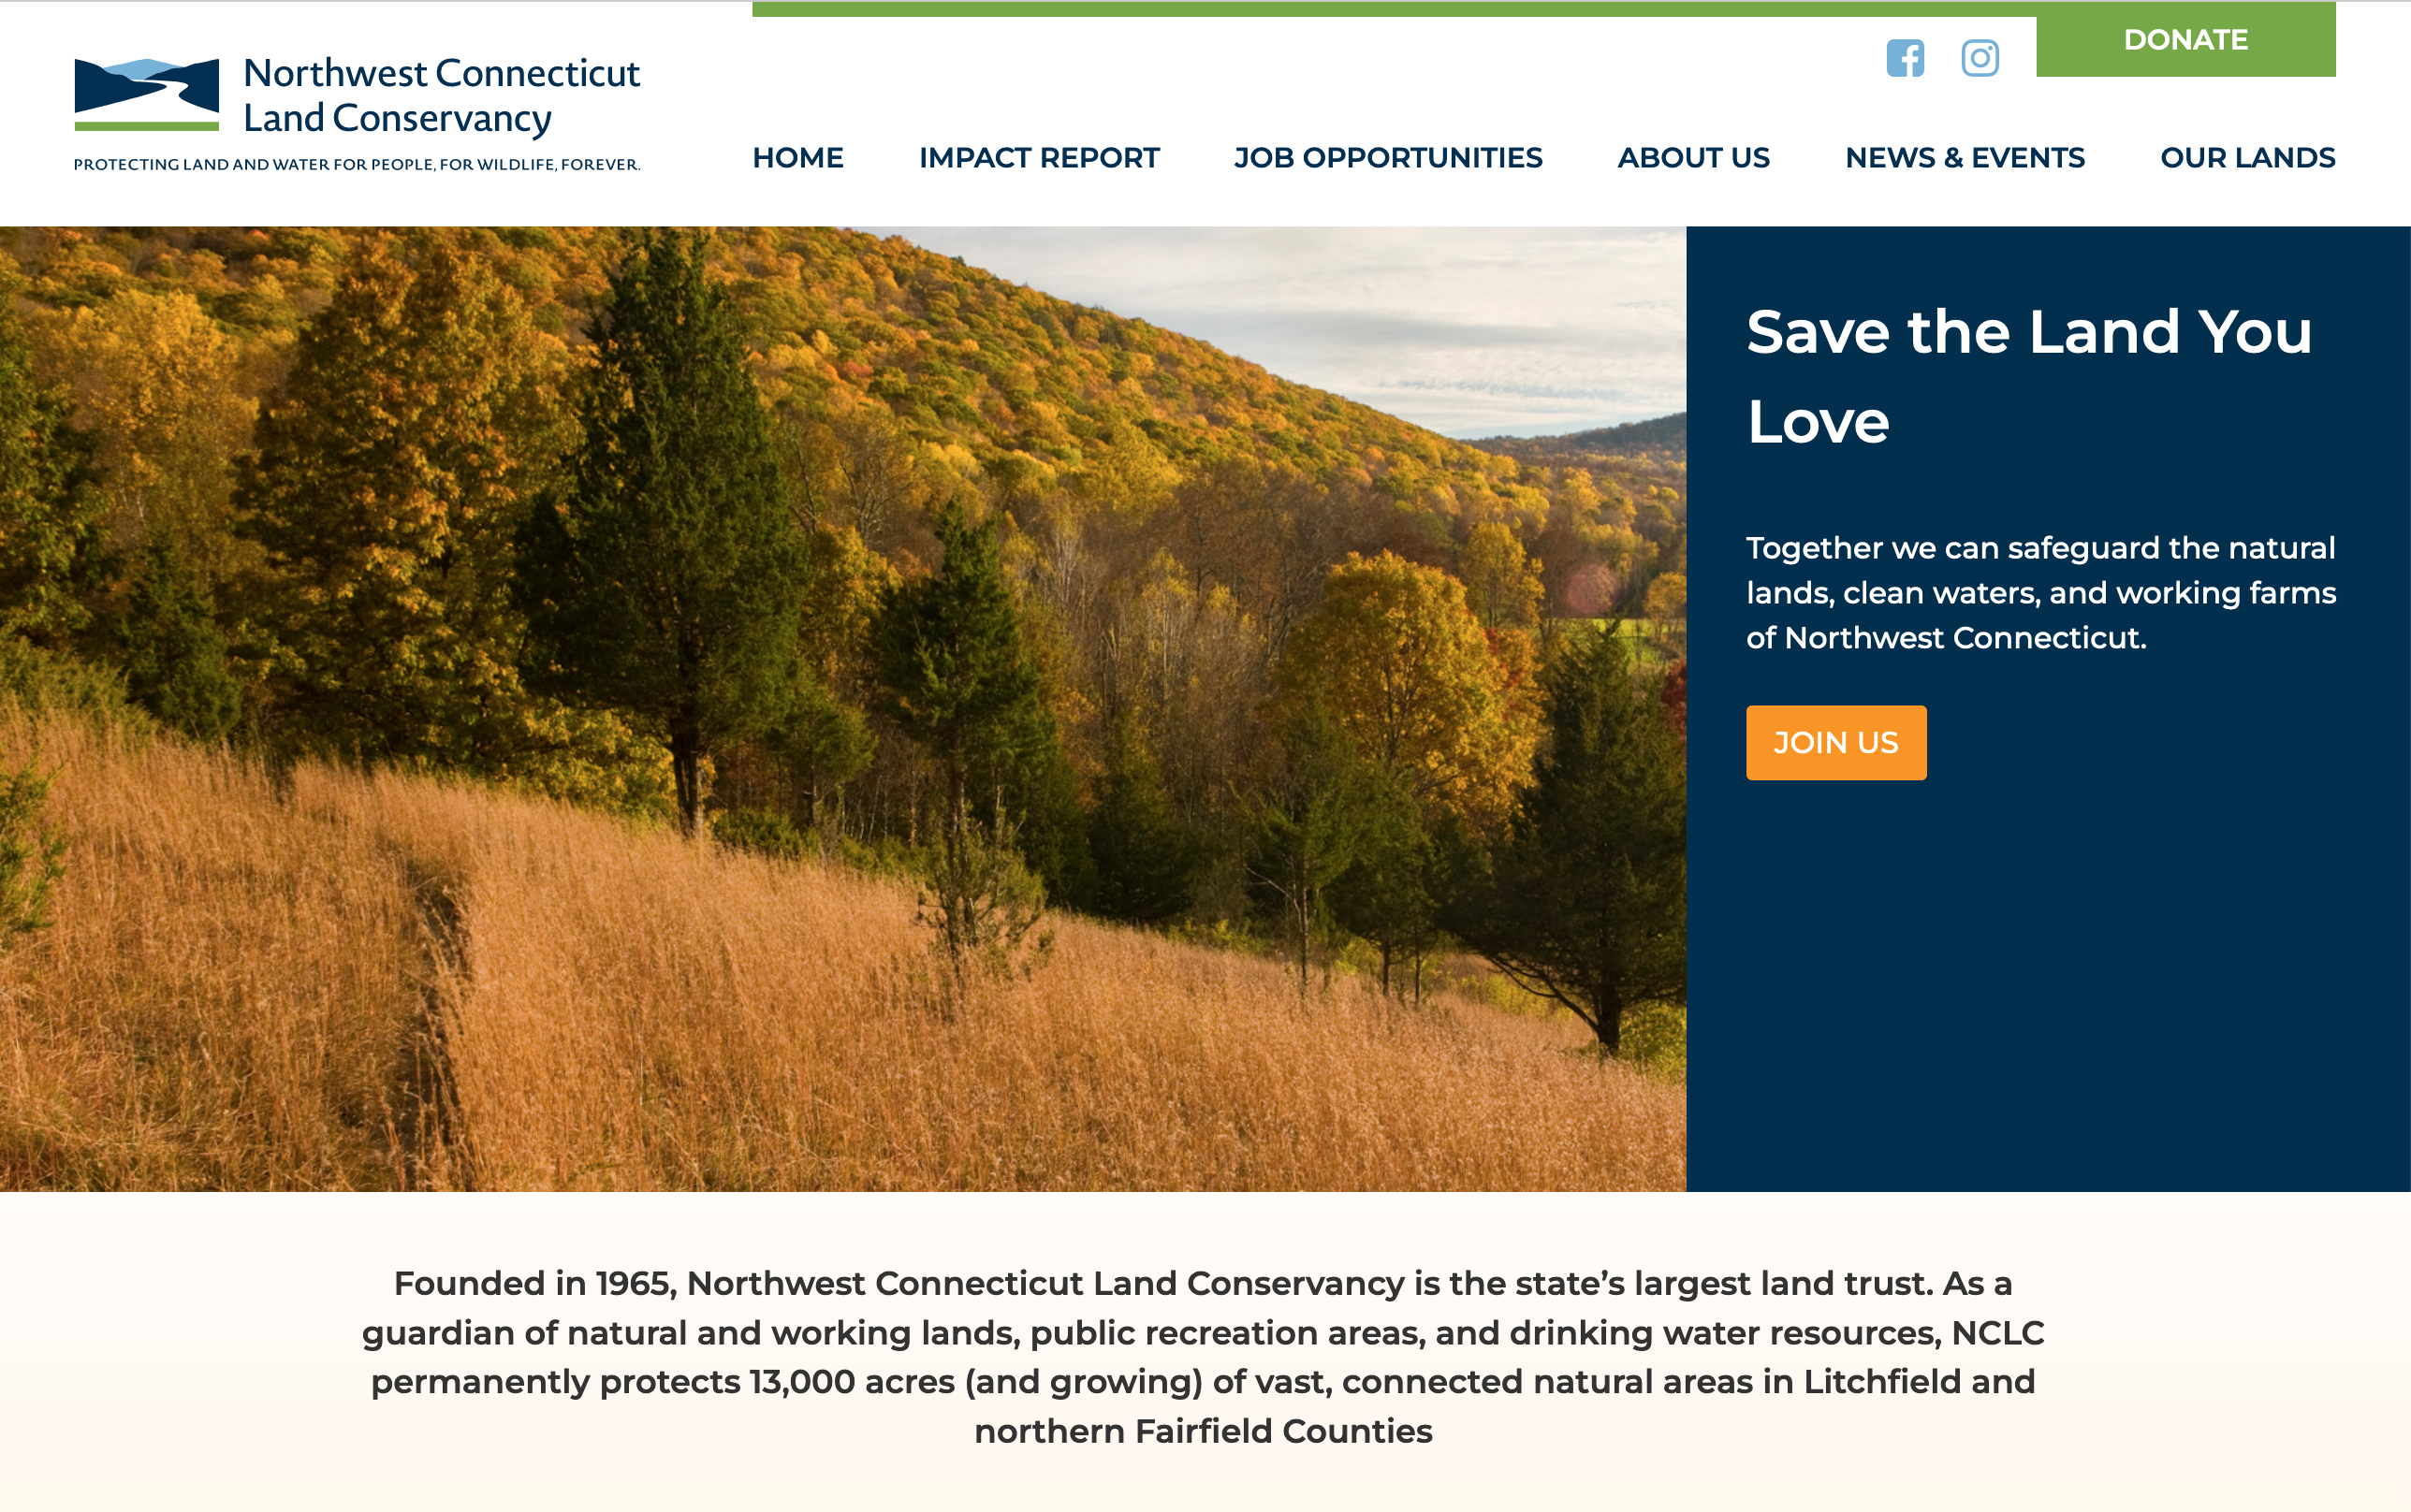 Northwest Connecticut Land Conservancy